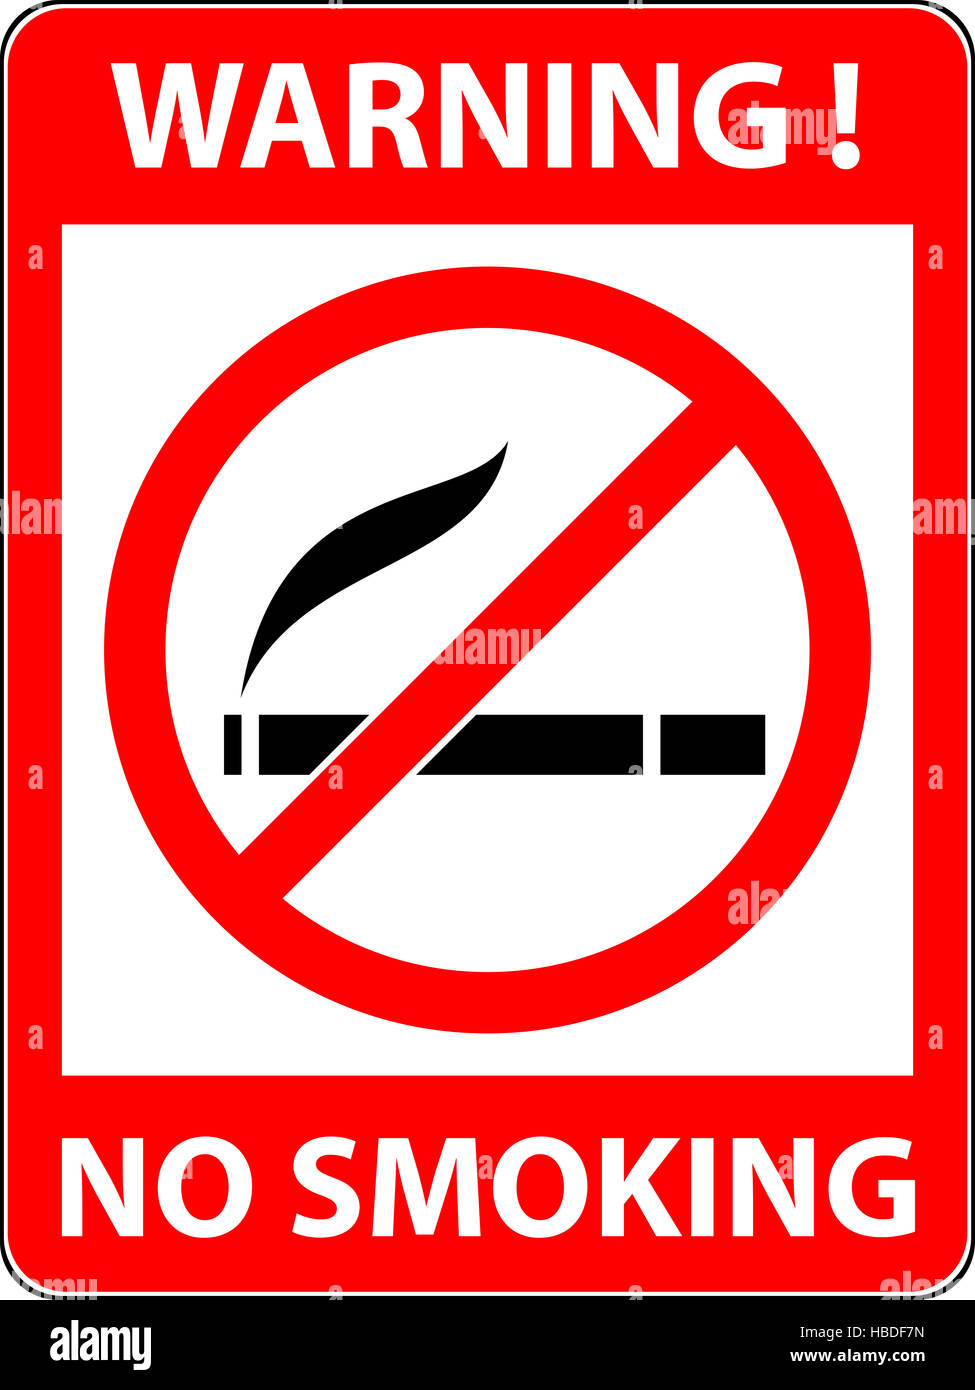 No smoking, cigarette prohibited symbol. Stock Photo